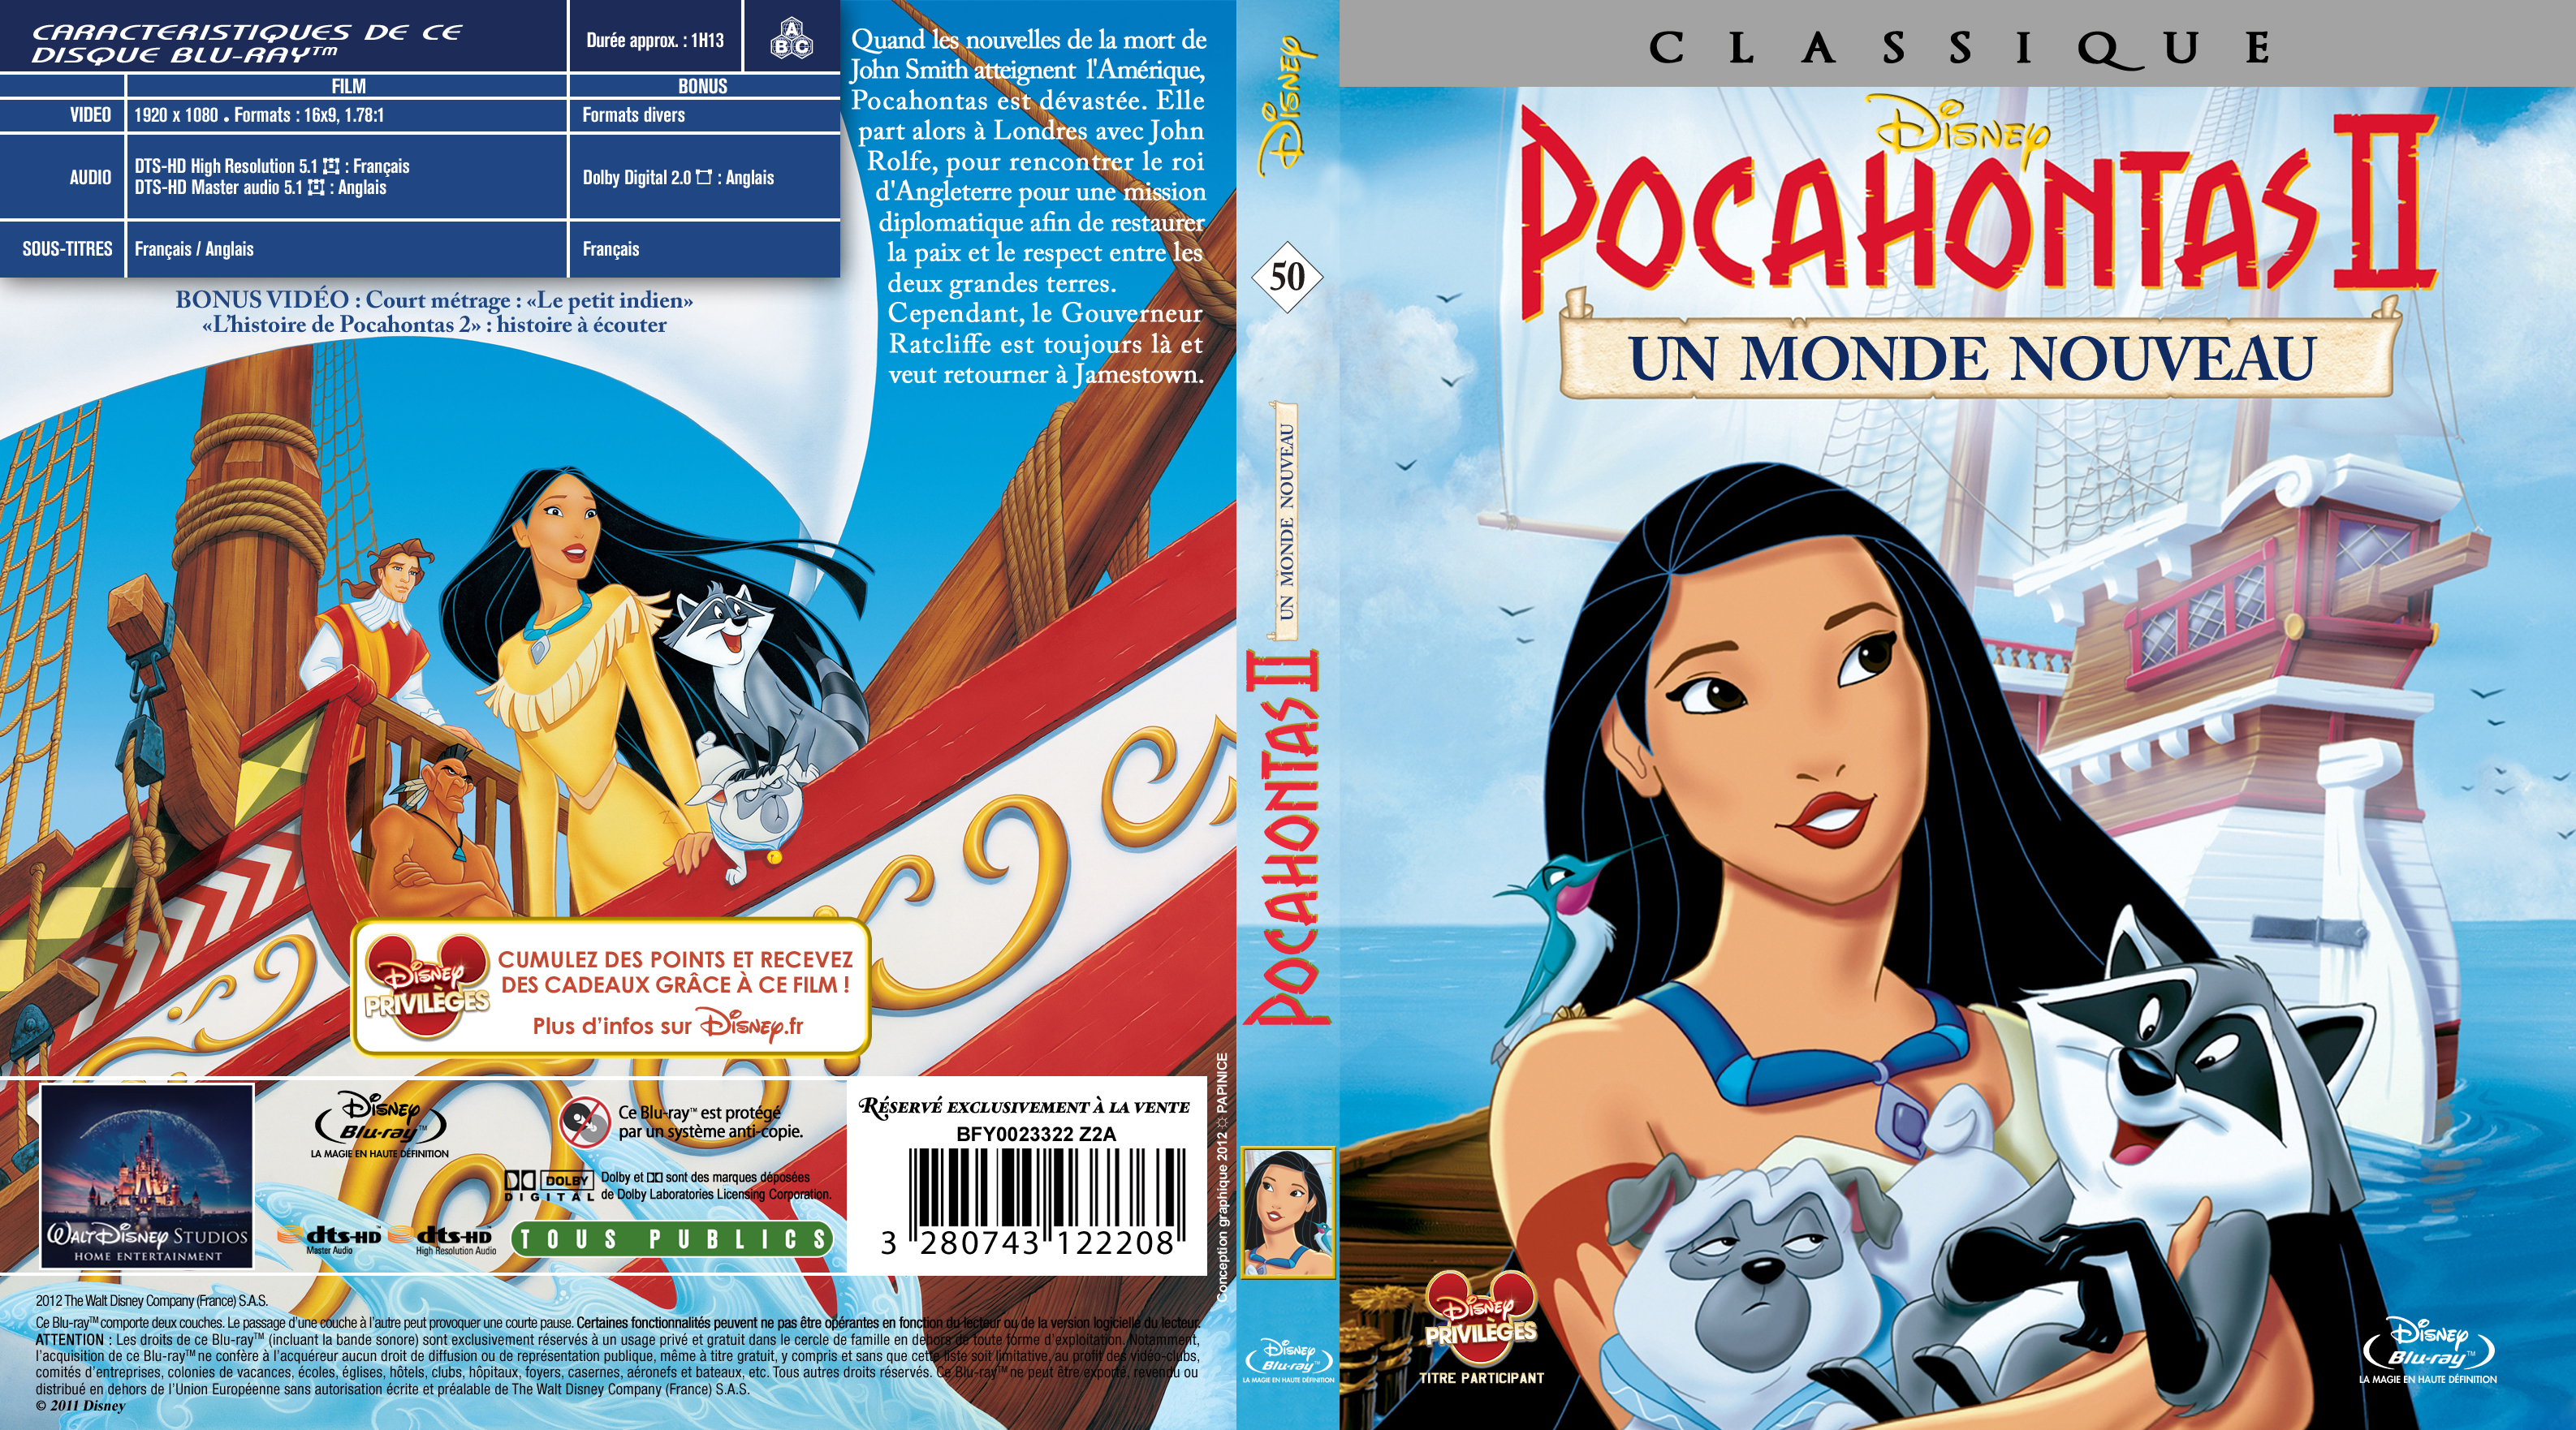 Jaquette DVD Pocahontas 2 (BLU-RAY) custom